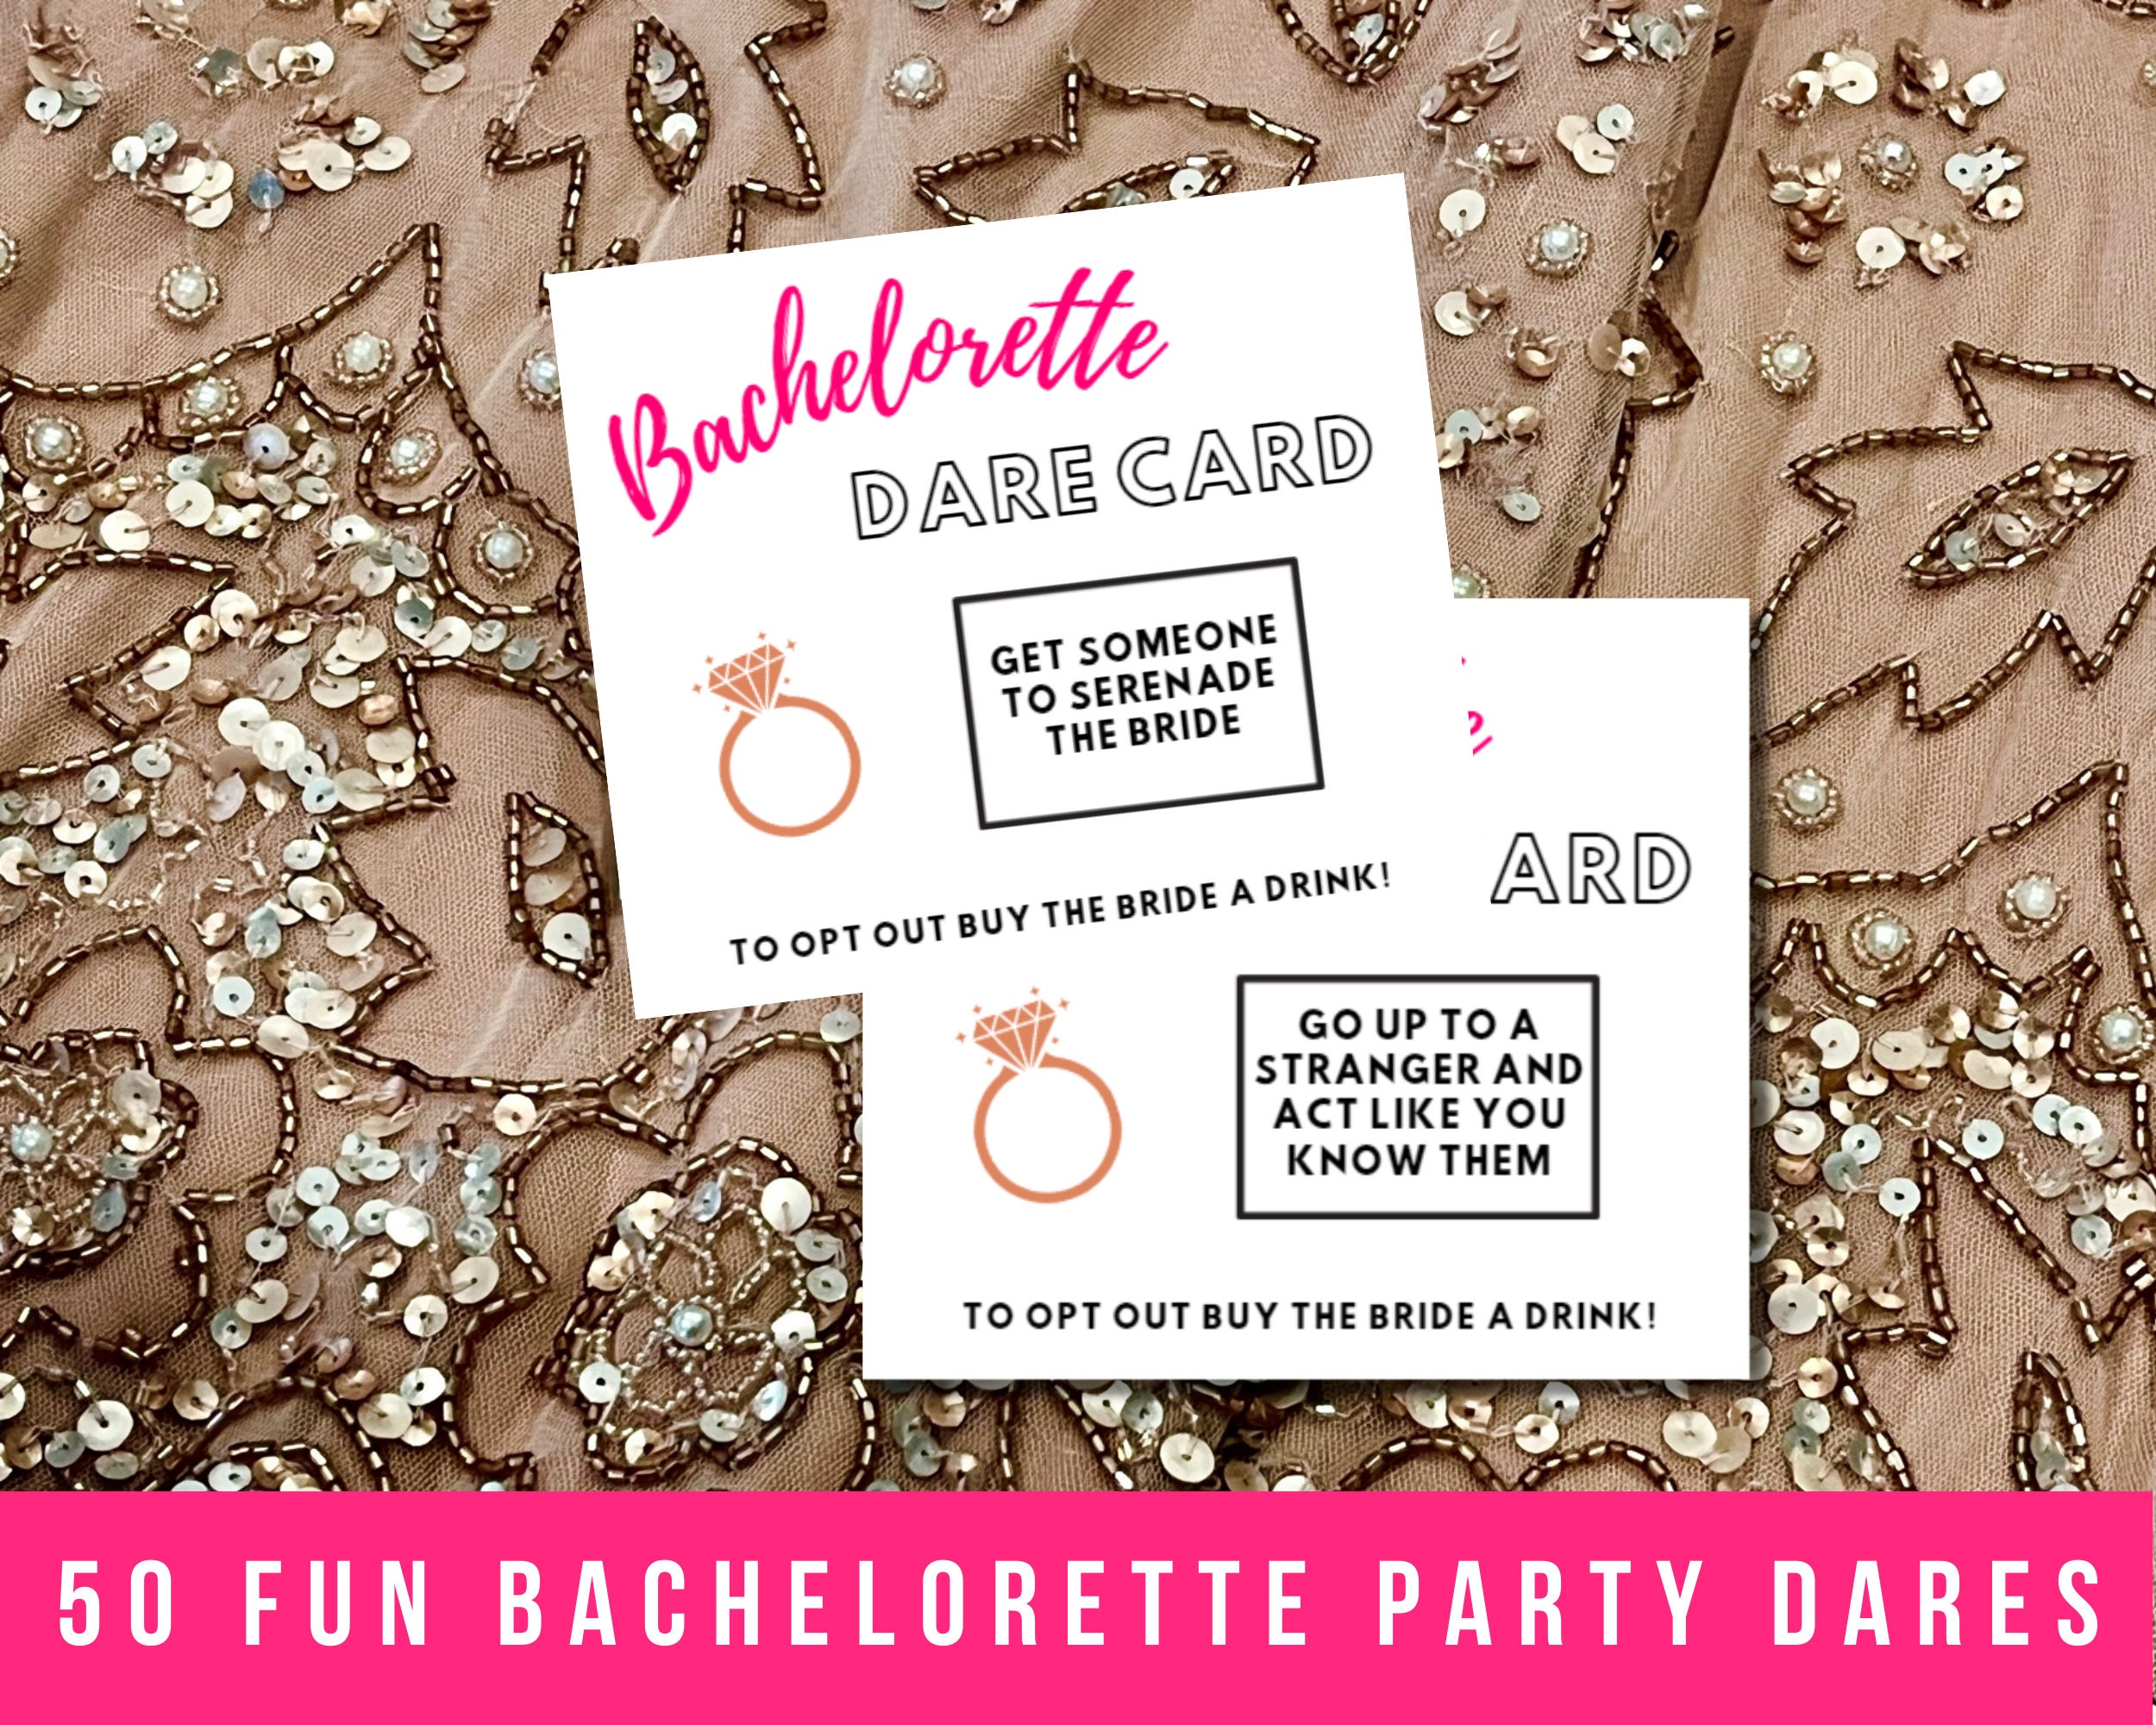 Dare to Do it Bachelorette Activity Cards – Nashlorette Store